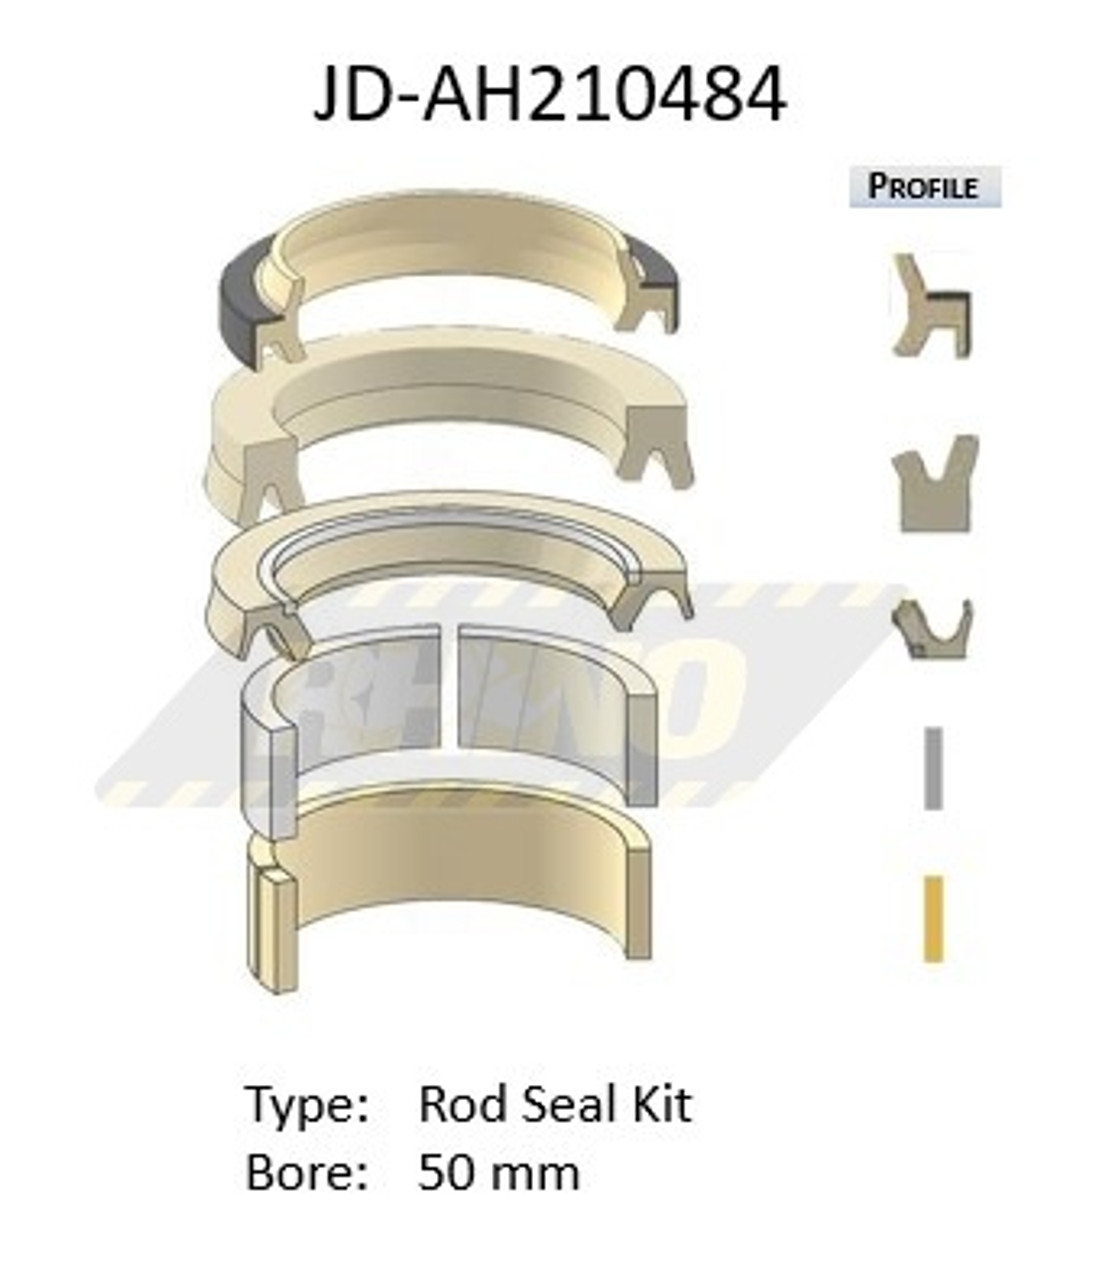 JD-AH210484, John Deere Seal Kit